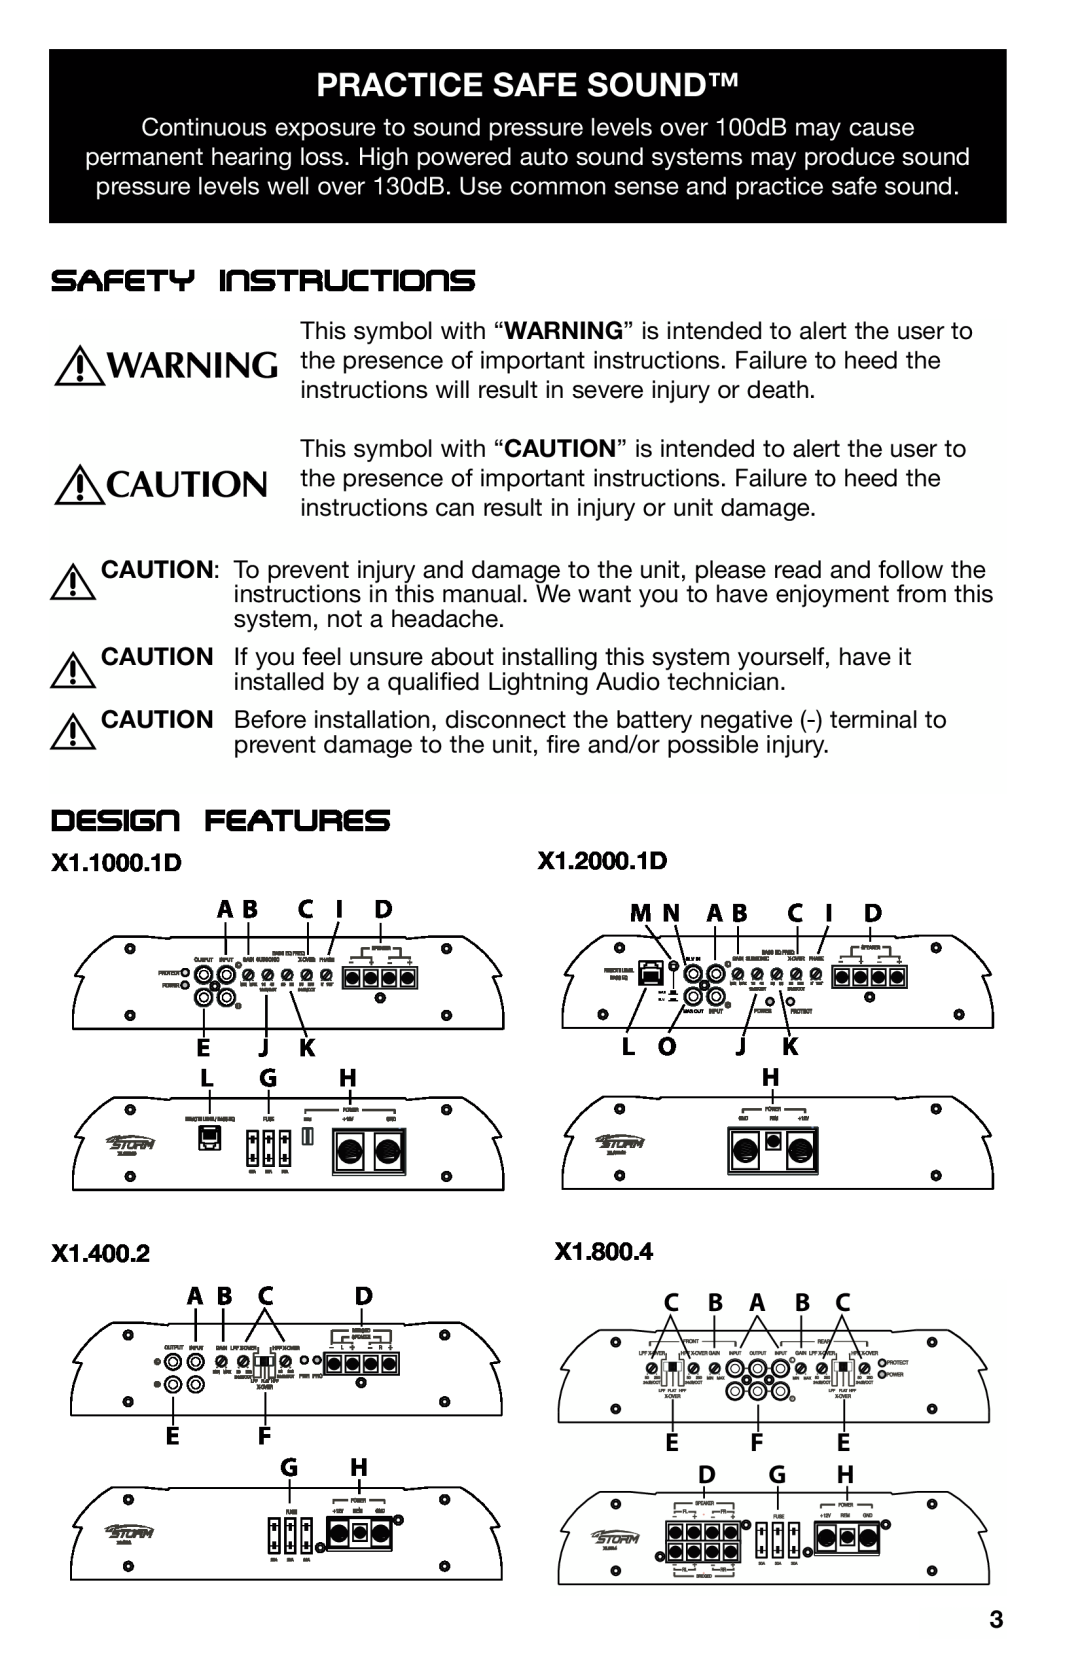 Lightning Audio X1.1000.1D manual Practice Safe Sound, Safety Instructions, Design Features, M N A B C I D, C B A B C 